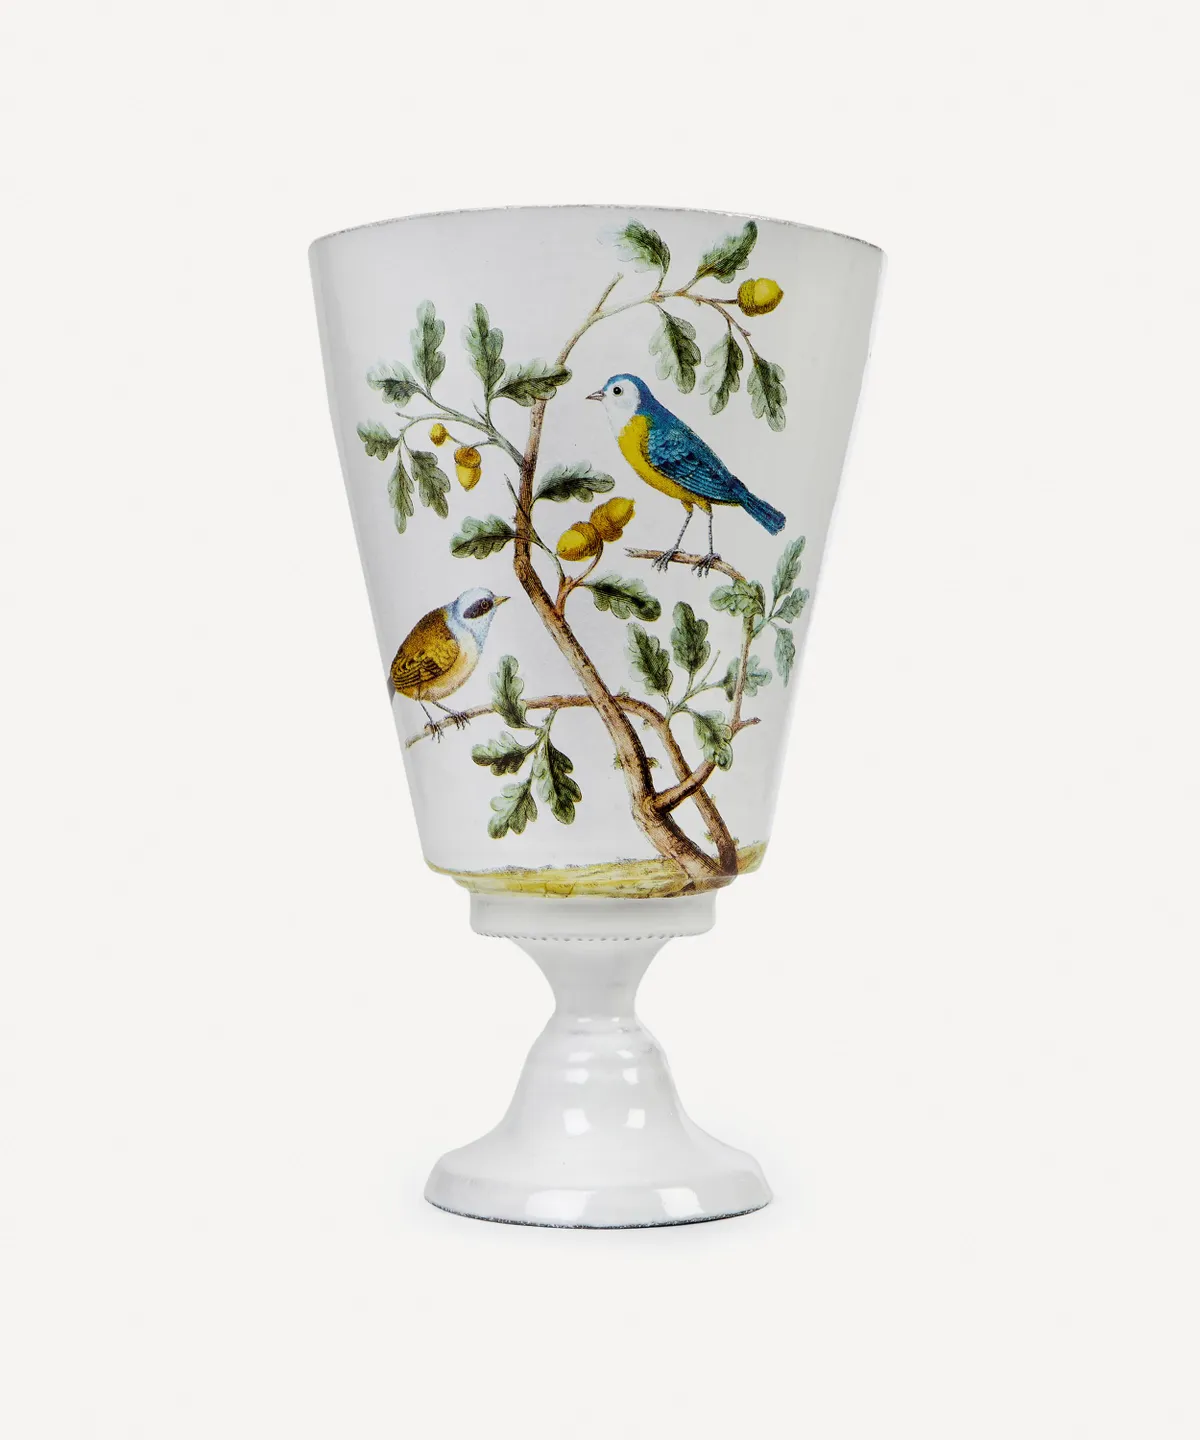 Handmade Titmouse vase by Astier de Villatte, £375, Liberty London